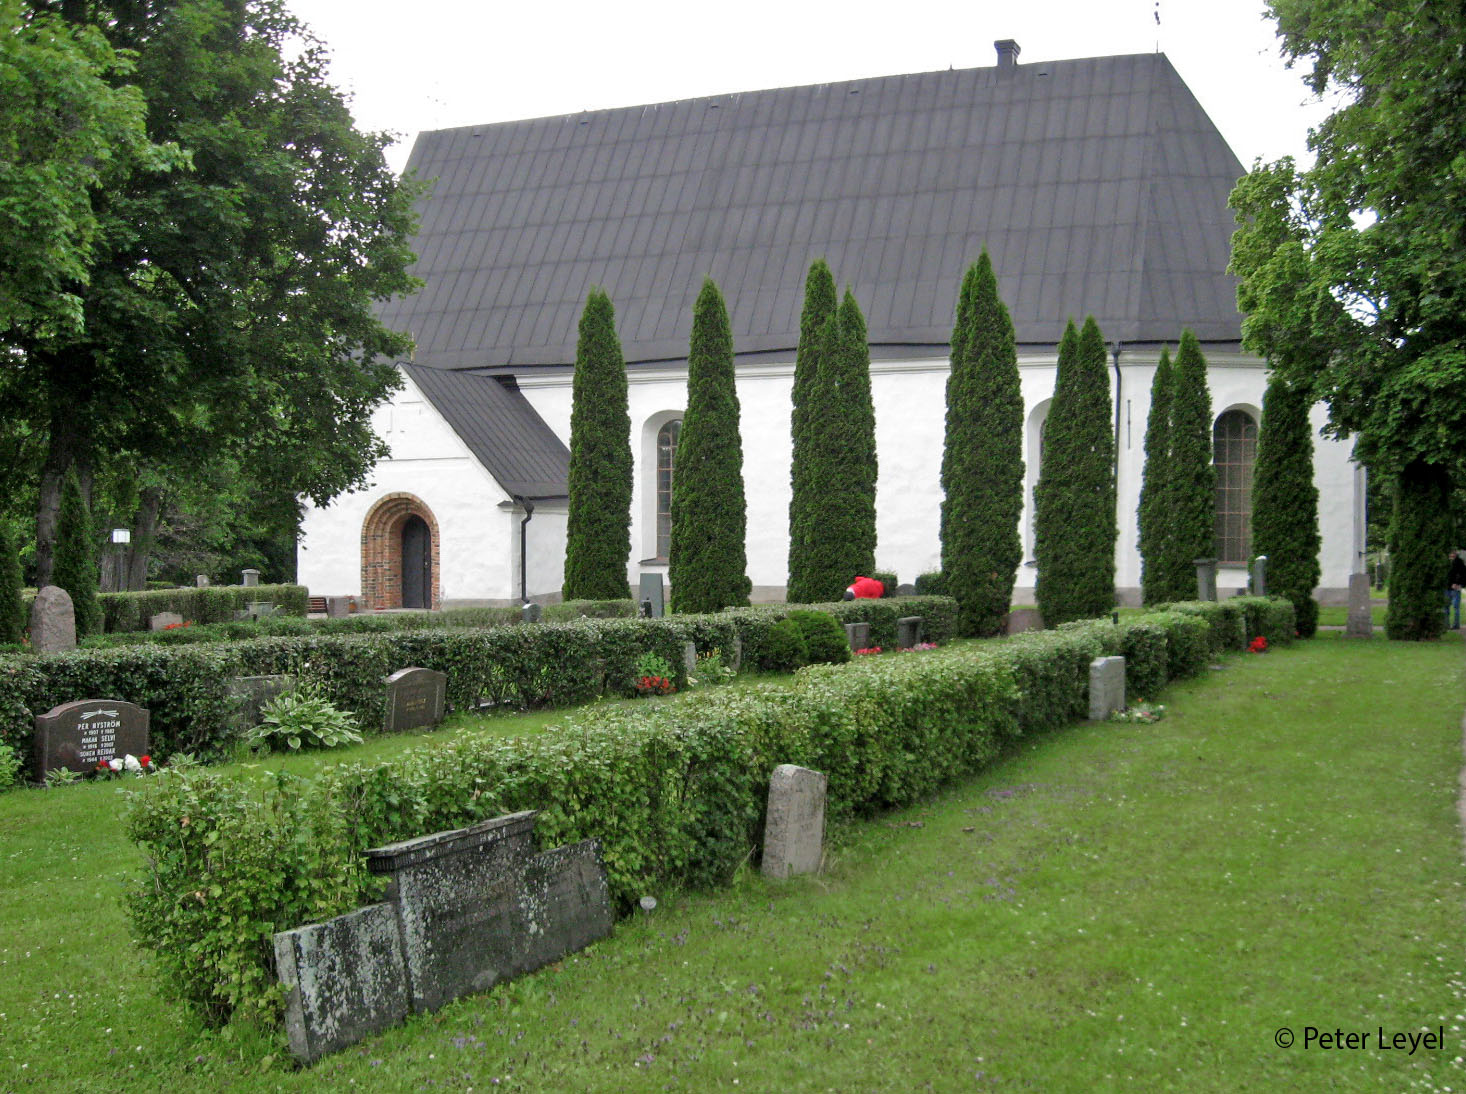 Älvkarleby church